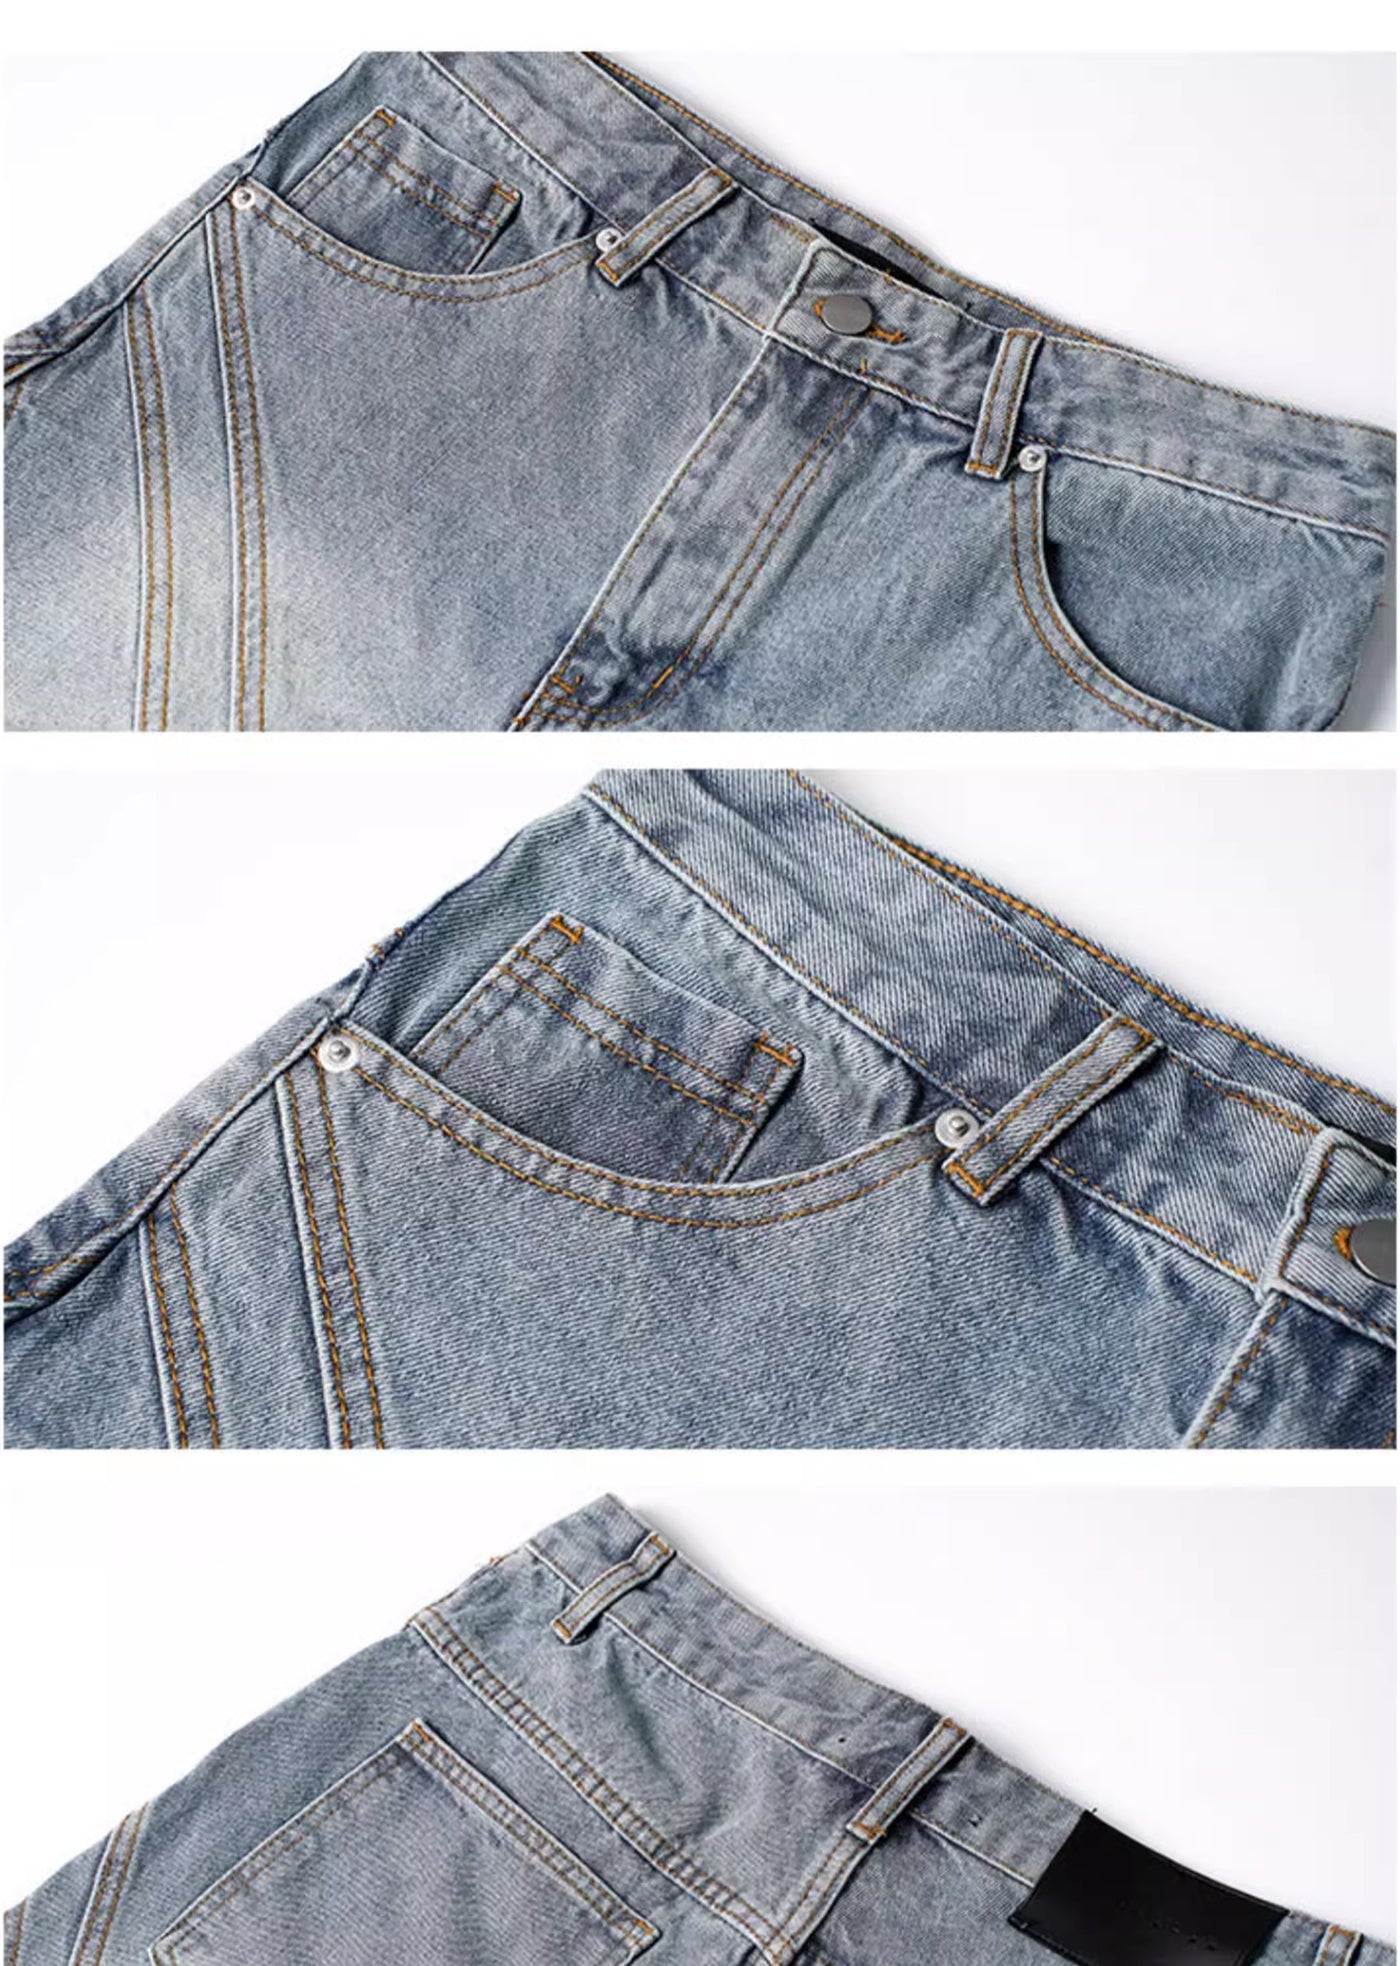 【Rayohopp】Short silhouette vintage faded denim pants  RH0116